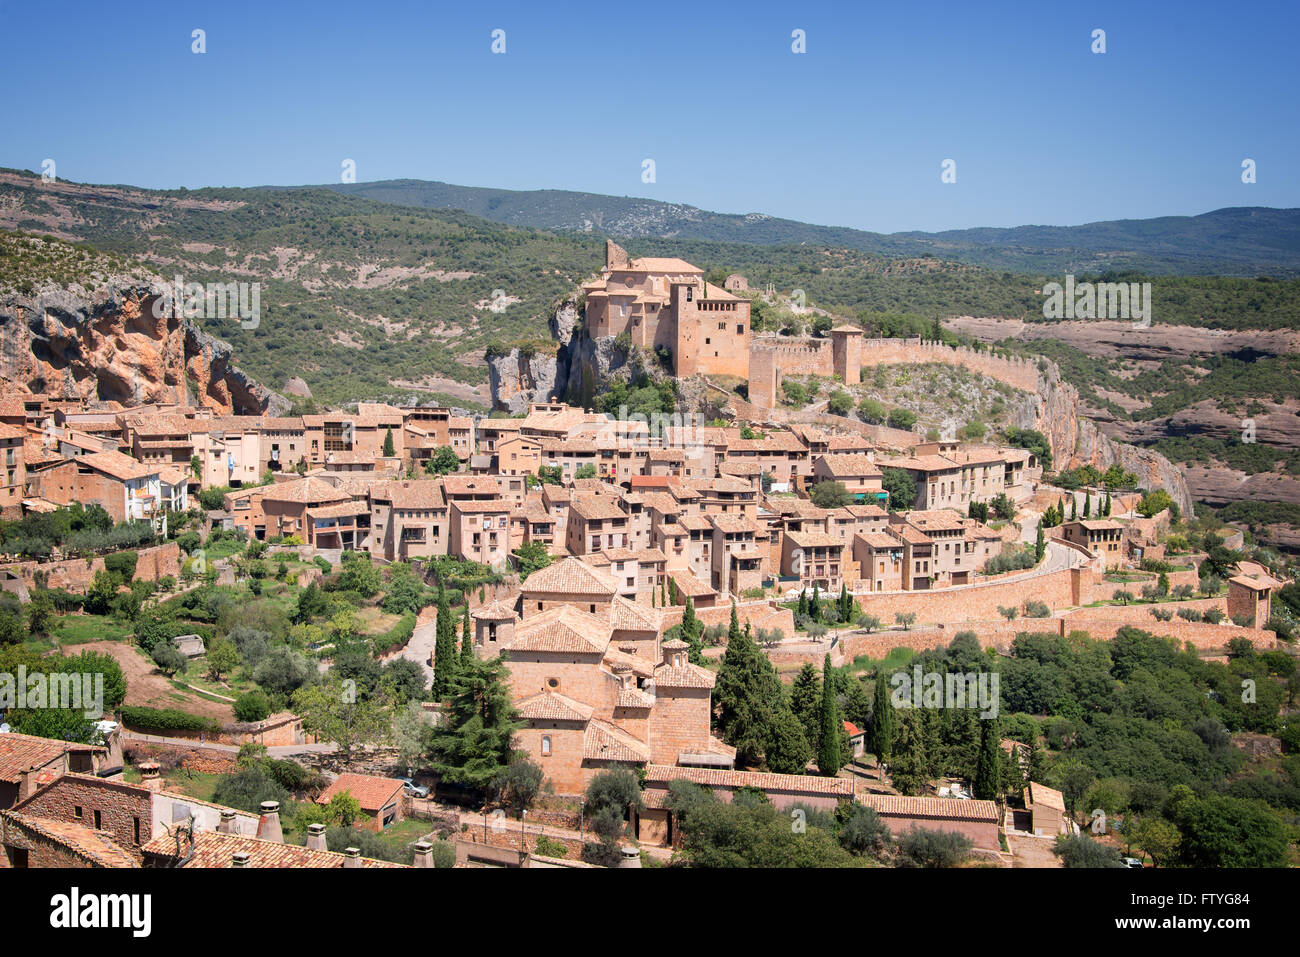 View of Alquezar in Sierra de Guara, Aragon, Spain Stock Photo